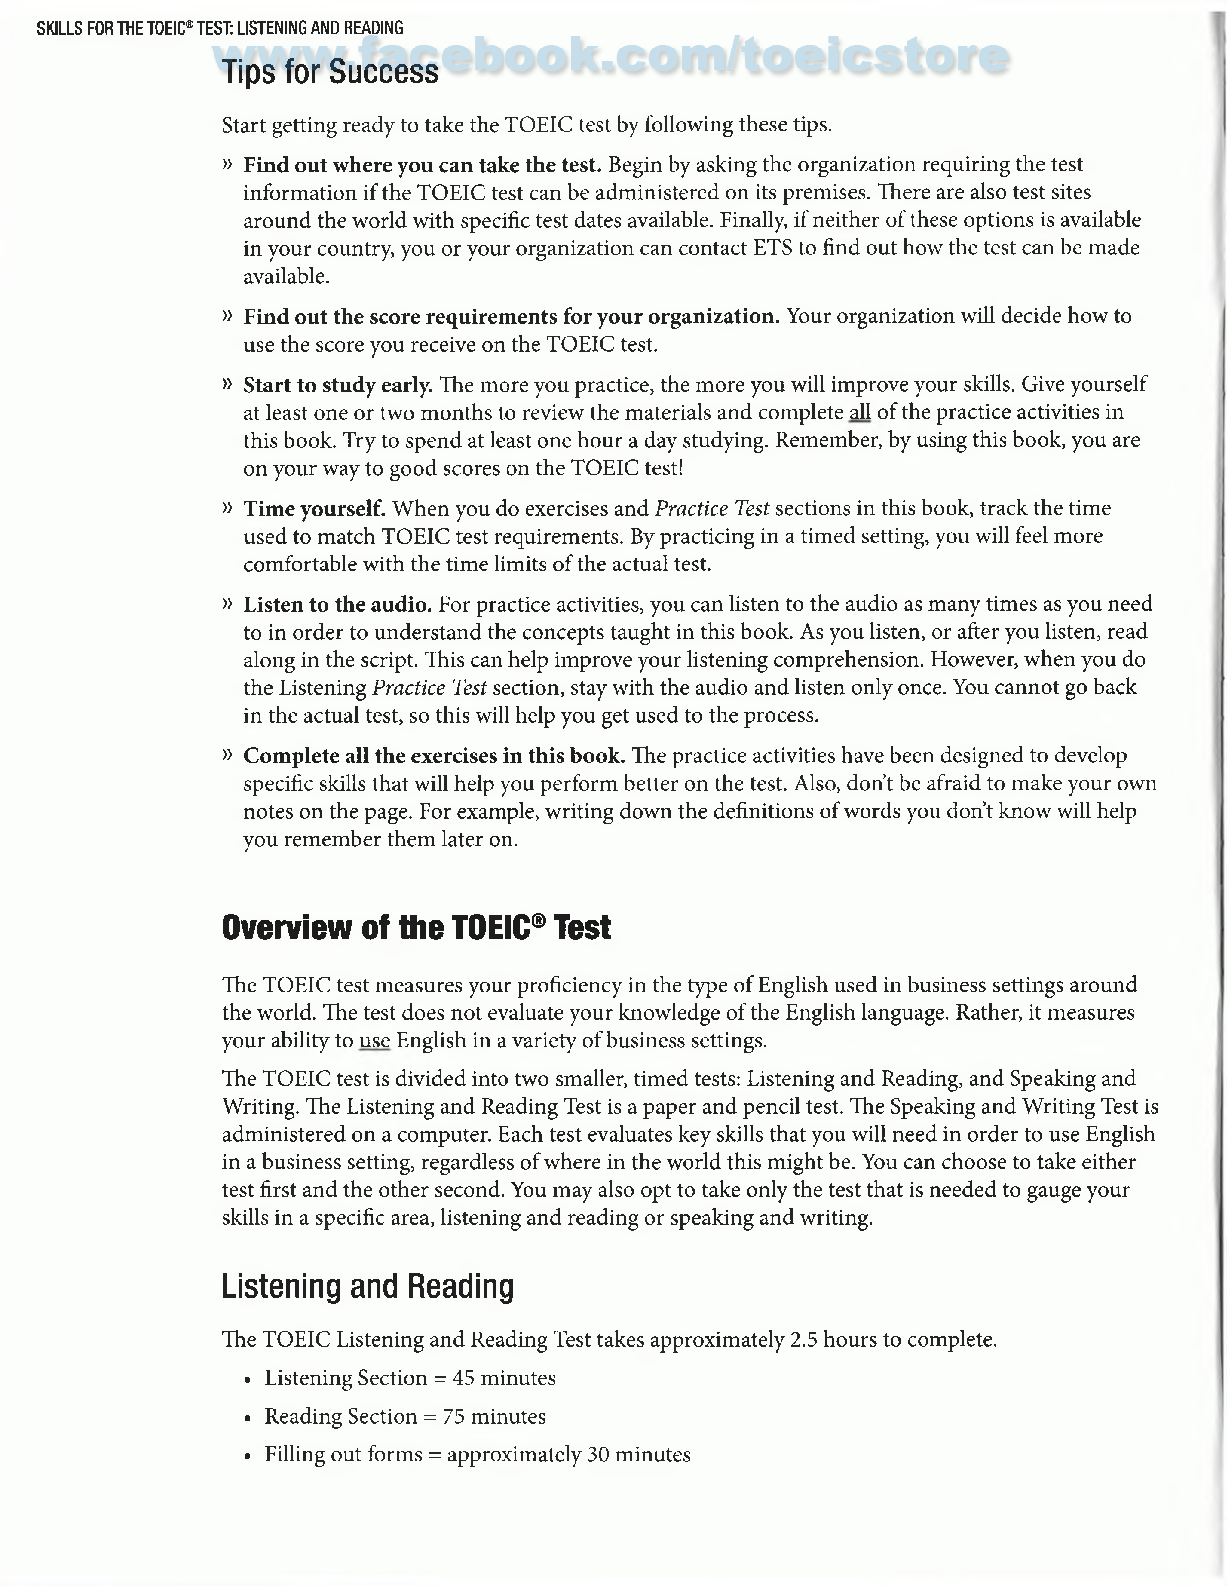 Sách Collins Skill for the TOEIC test Reading Listening | Xem online, tải PDF miễn phí (trang 5)